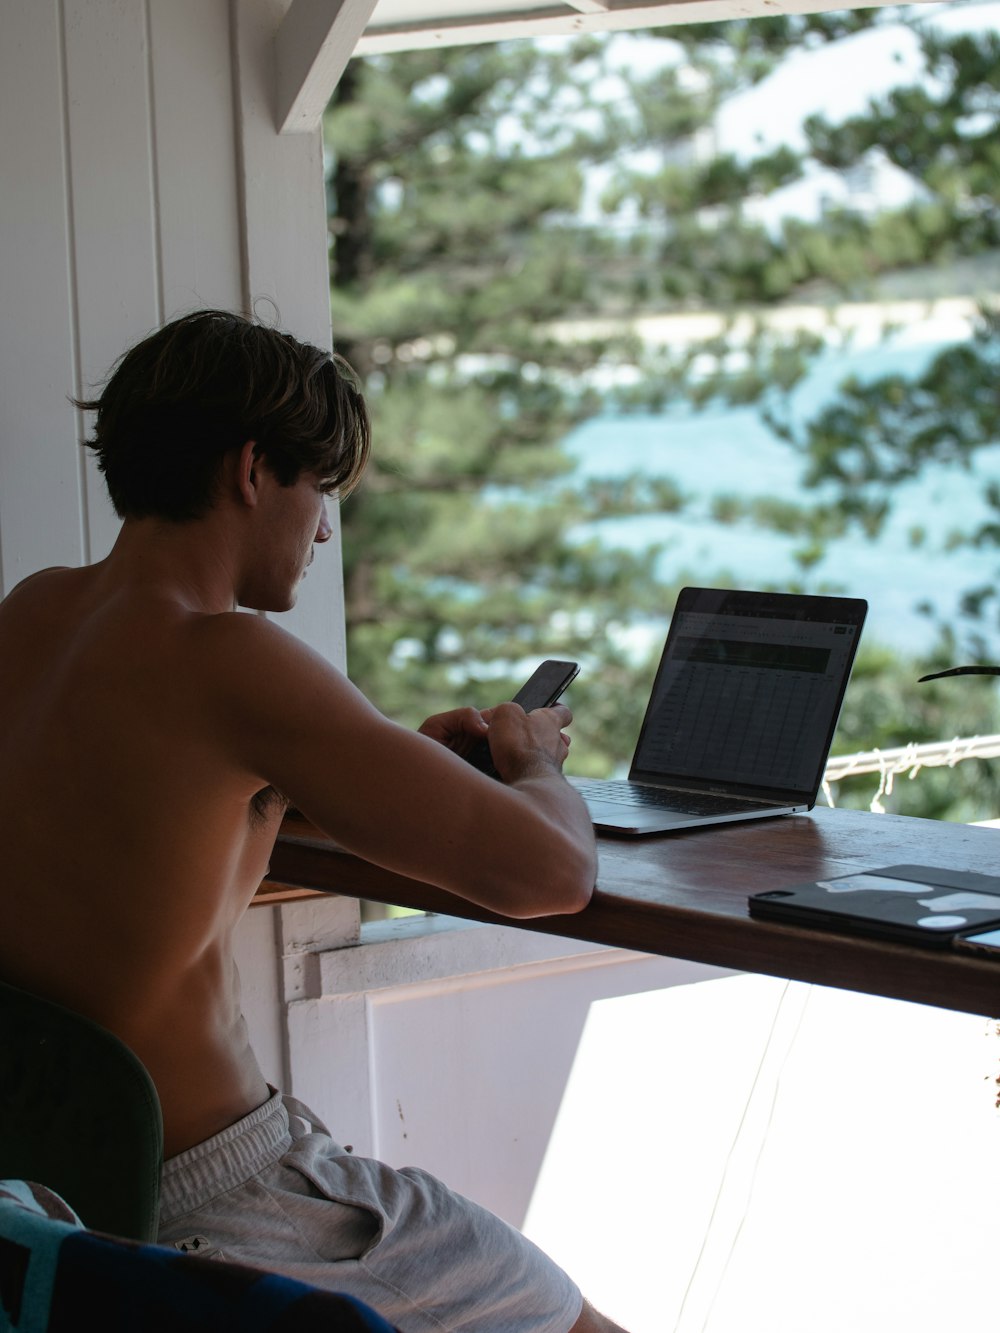 topless man using black laptop computer